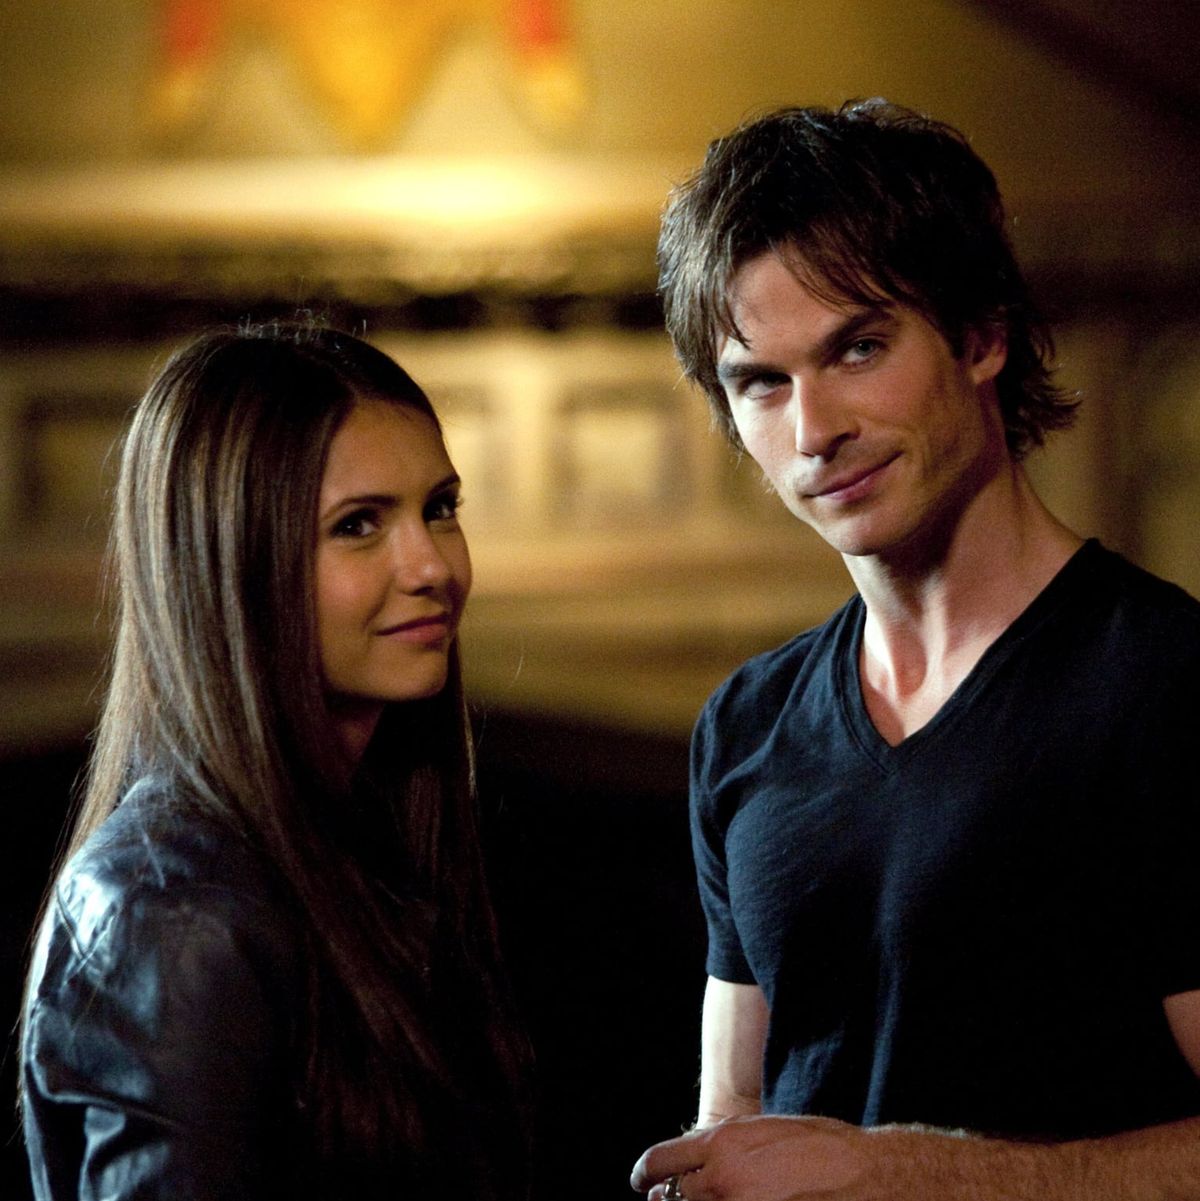 The Vampire Diaries - Damon and Elena fanfiction. - Three